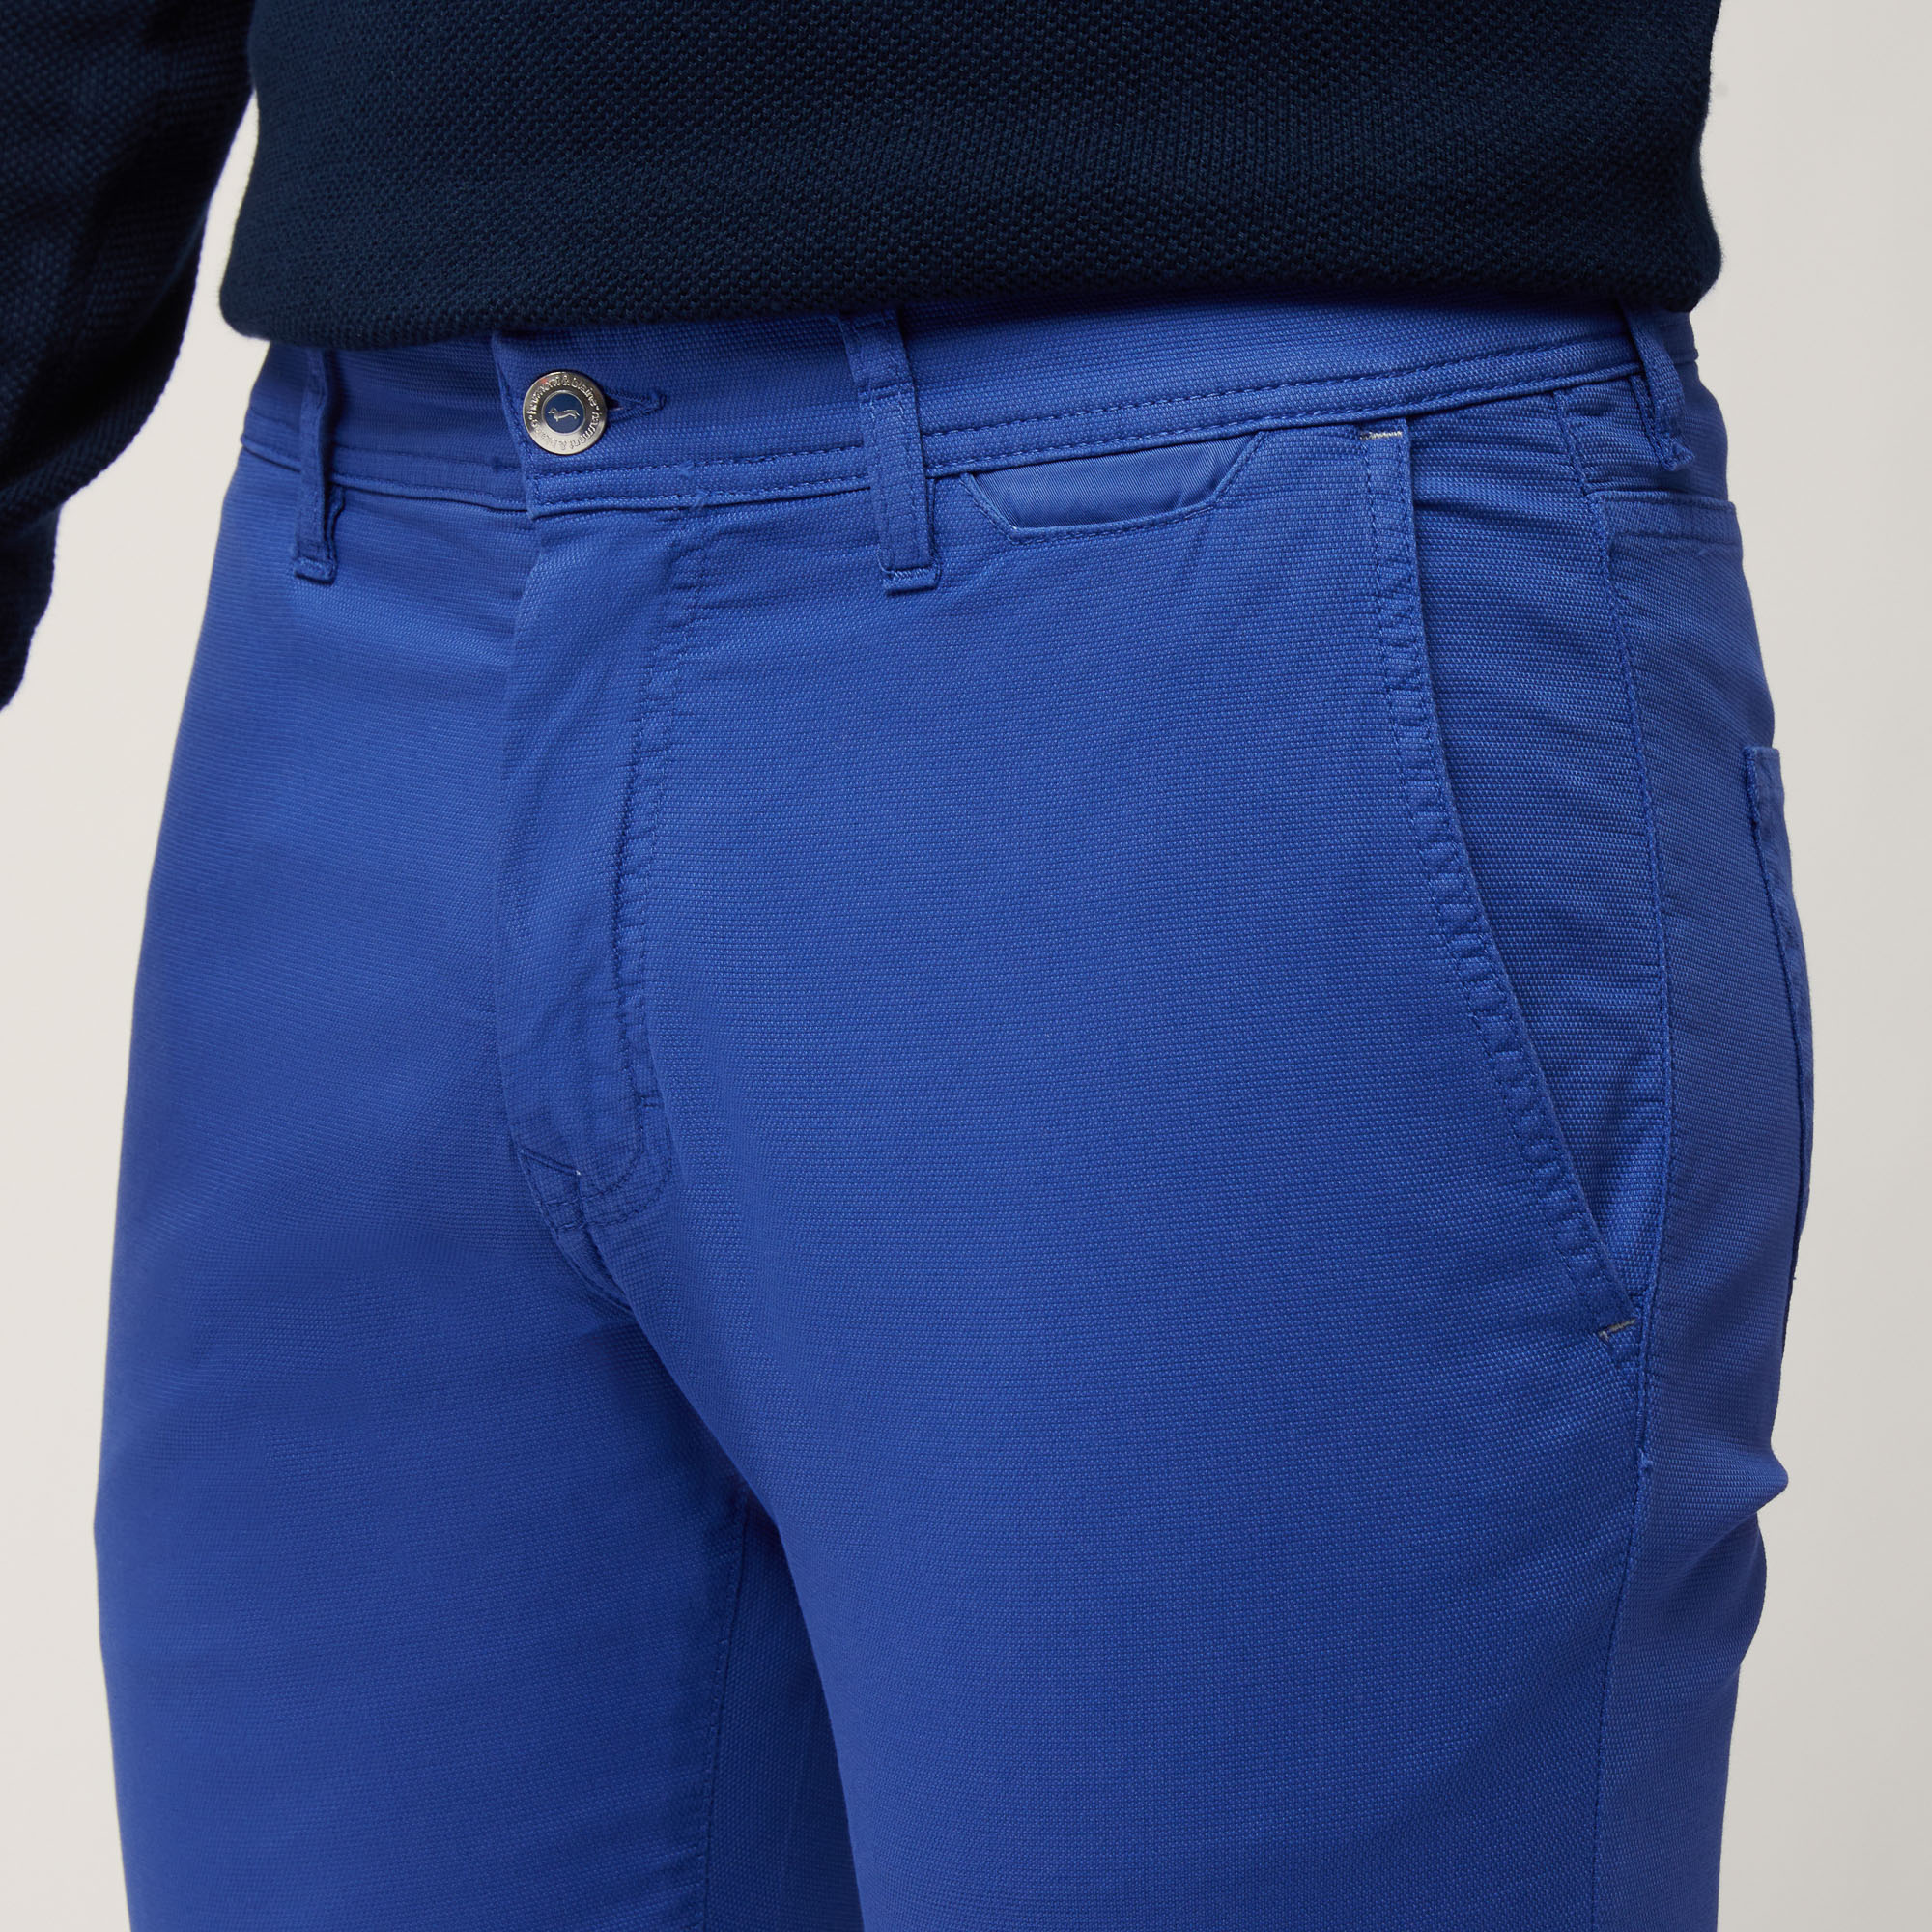 Colorfive Pants, Hydrangea, large image number 2